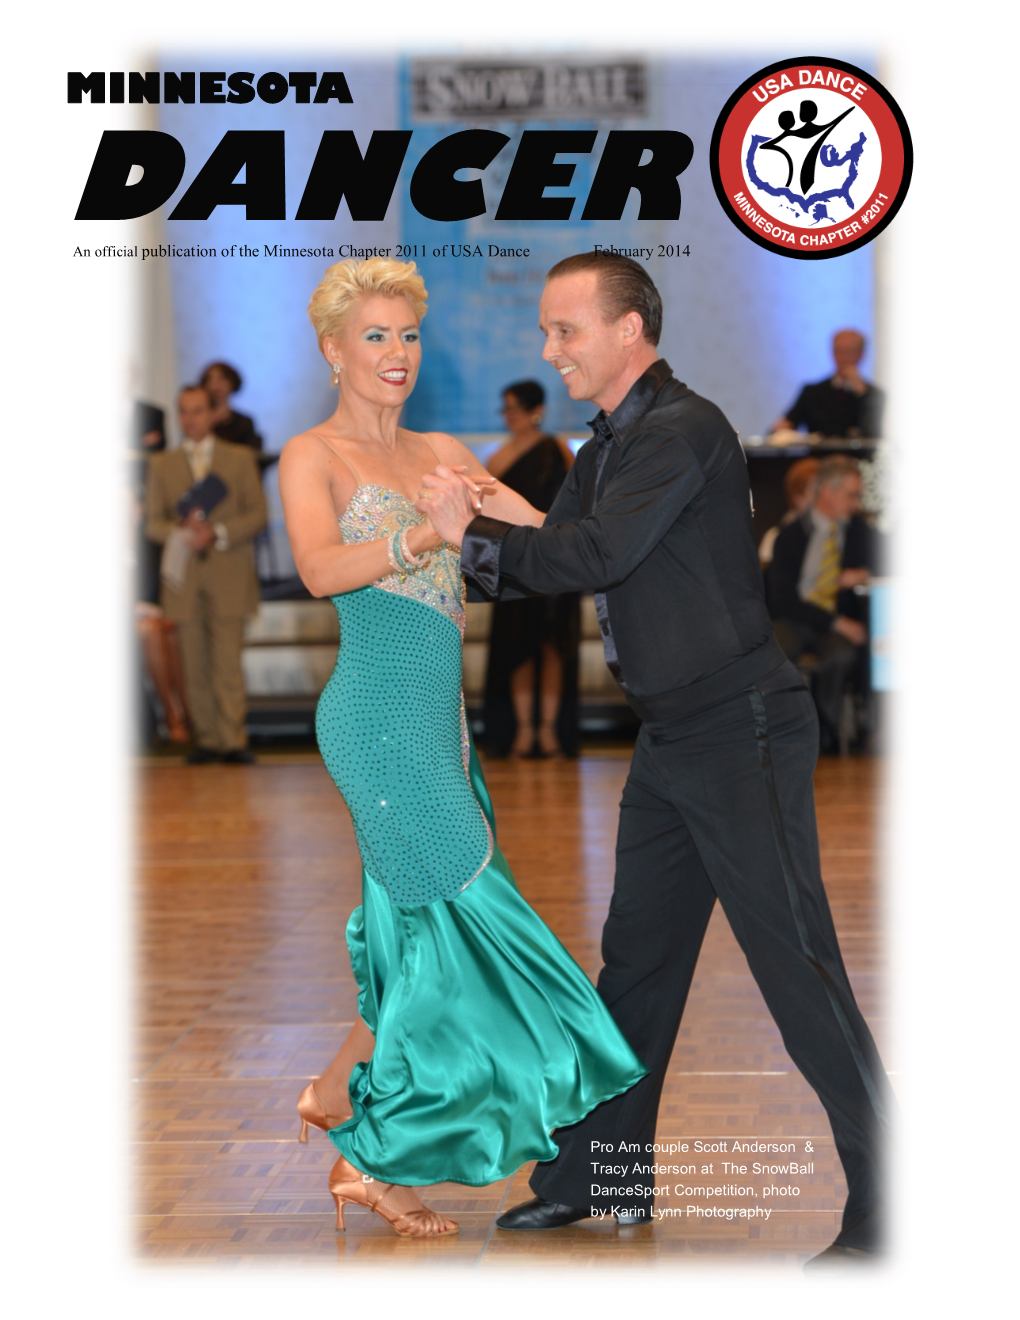 MINNESOTA DANCER an Official Publication of the Minnesota Chapter 2011 of USA Dance February 2014